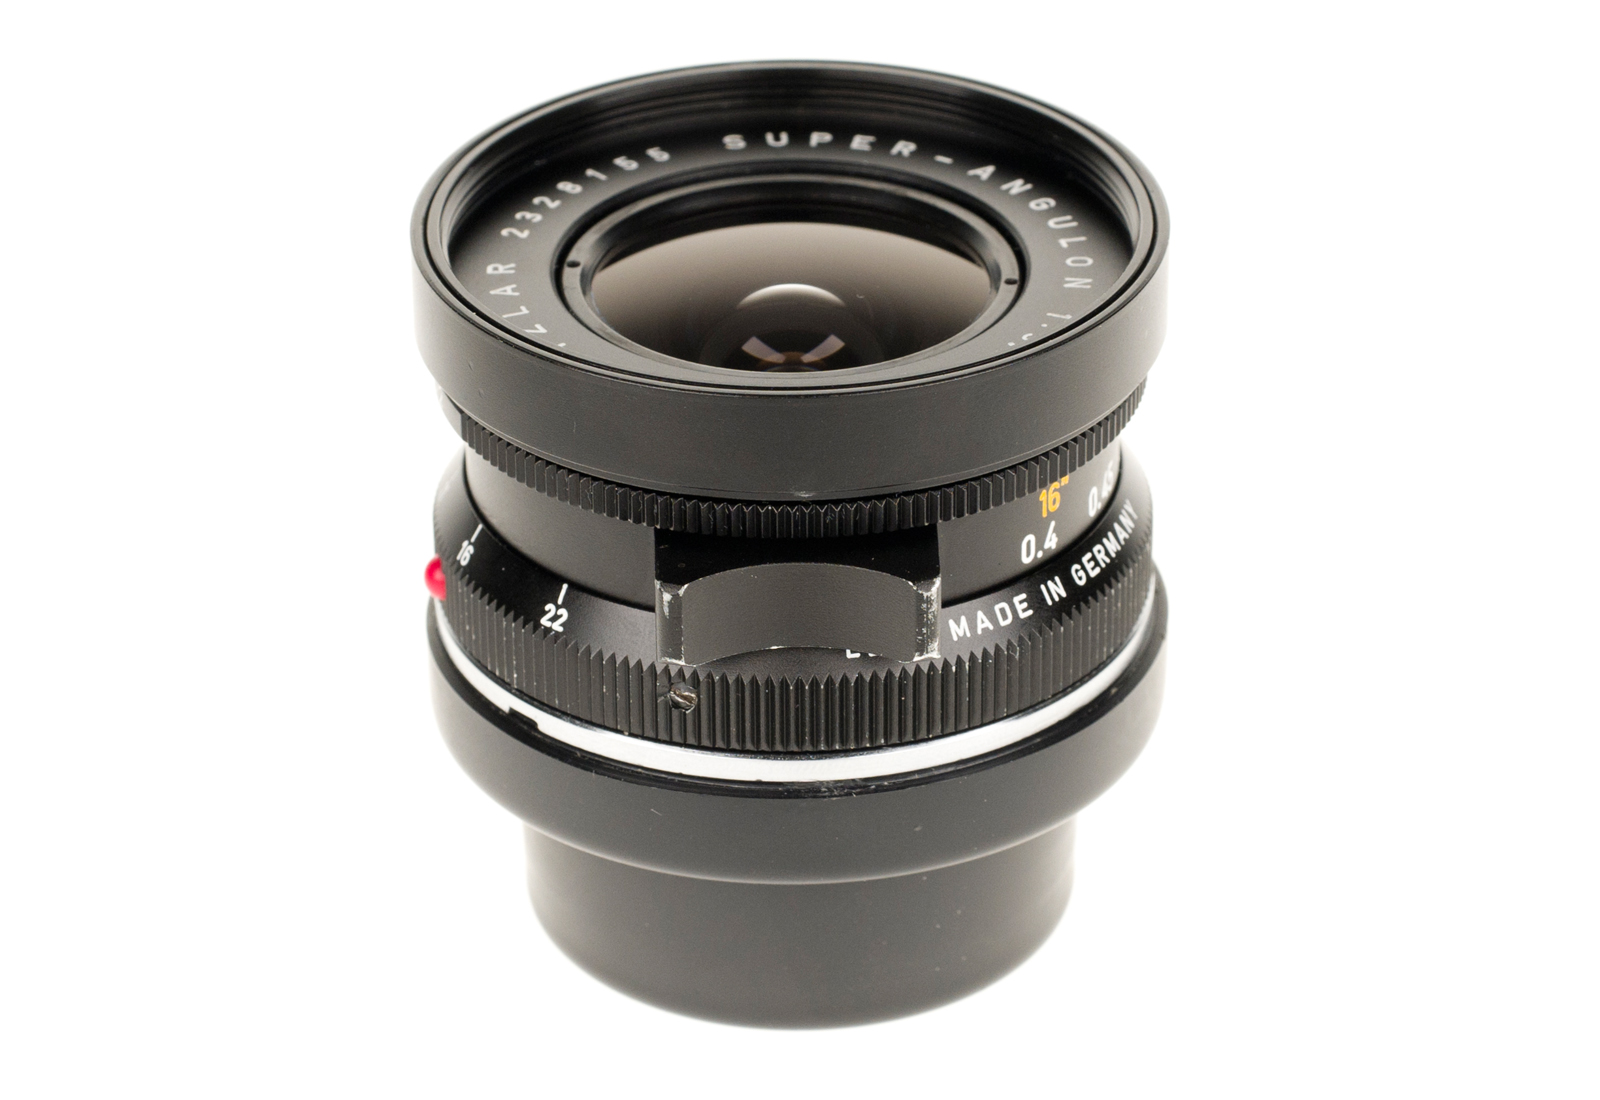 Leica Super-Angulon-M 1:3.4/21mm, black + CLA